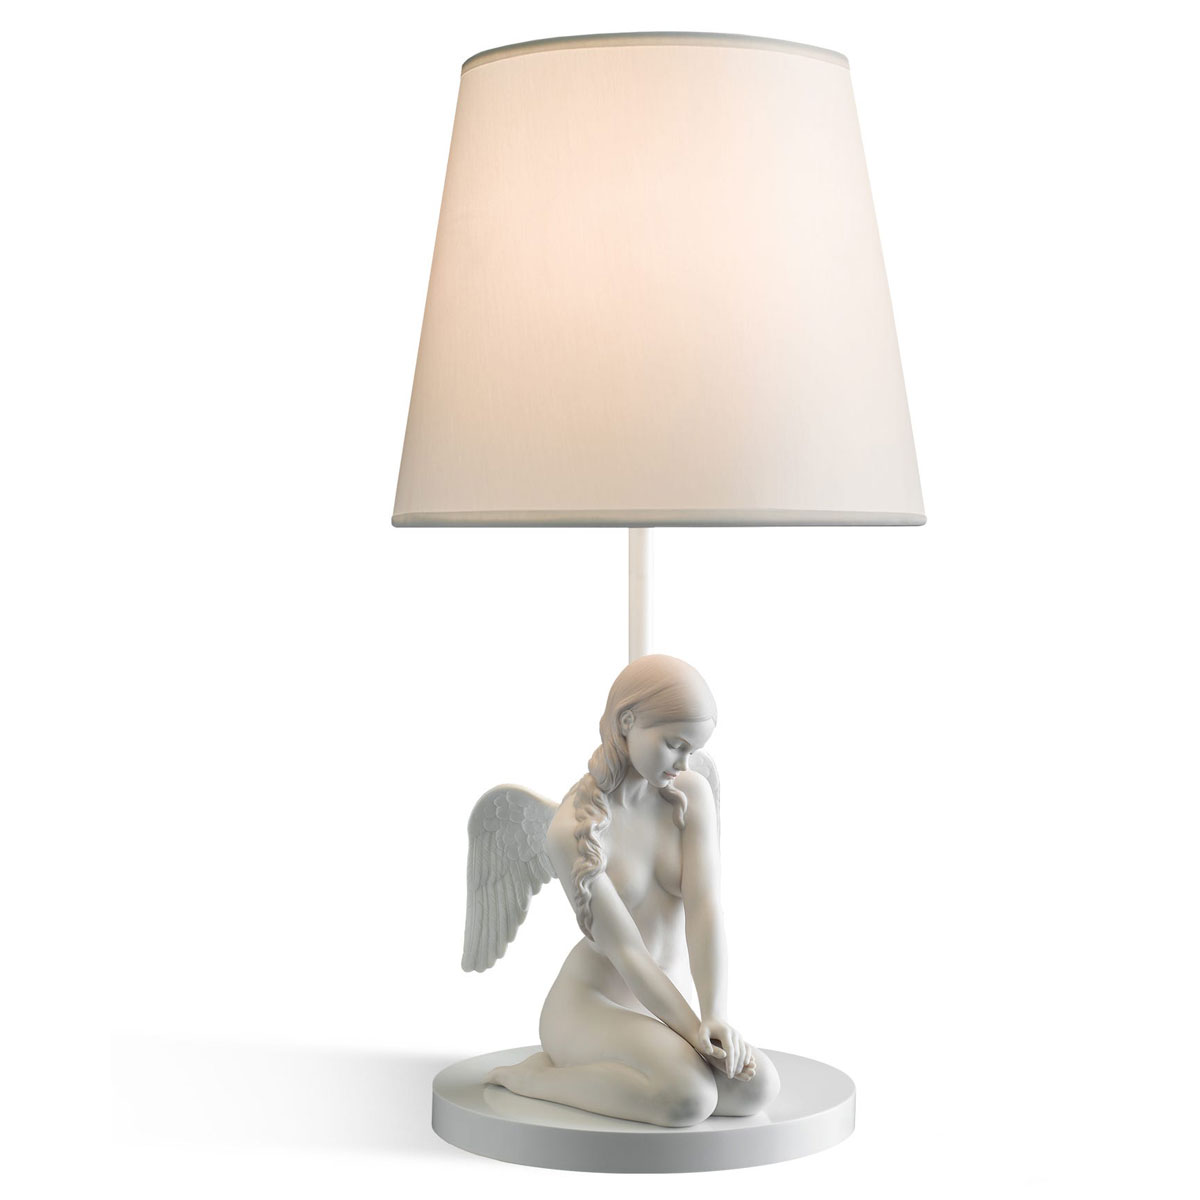 Lladro Classic Lighting, Beautiful Angel Table Lamp